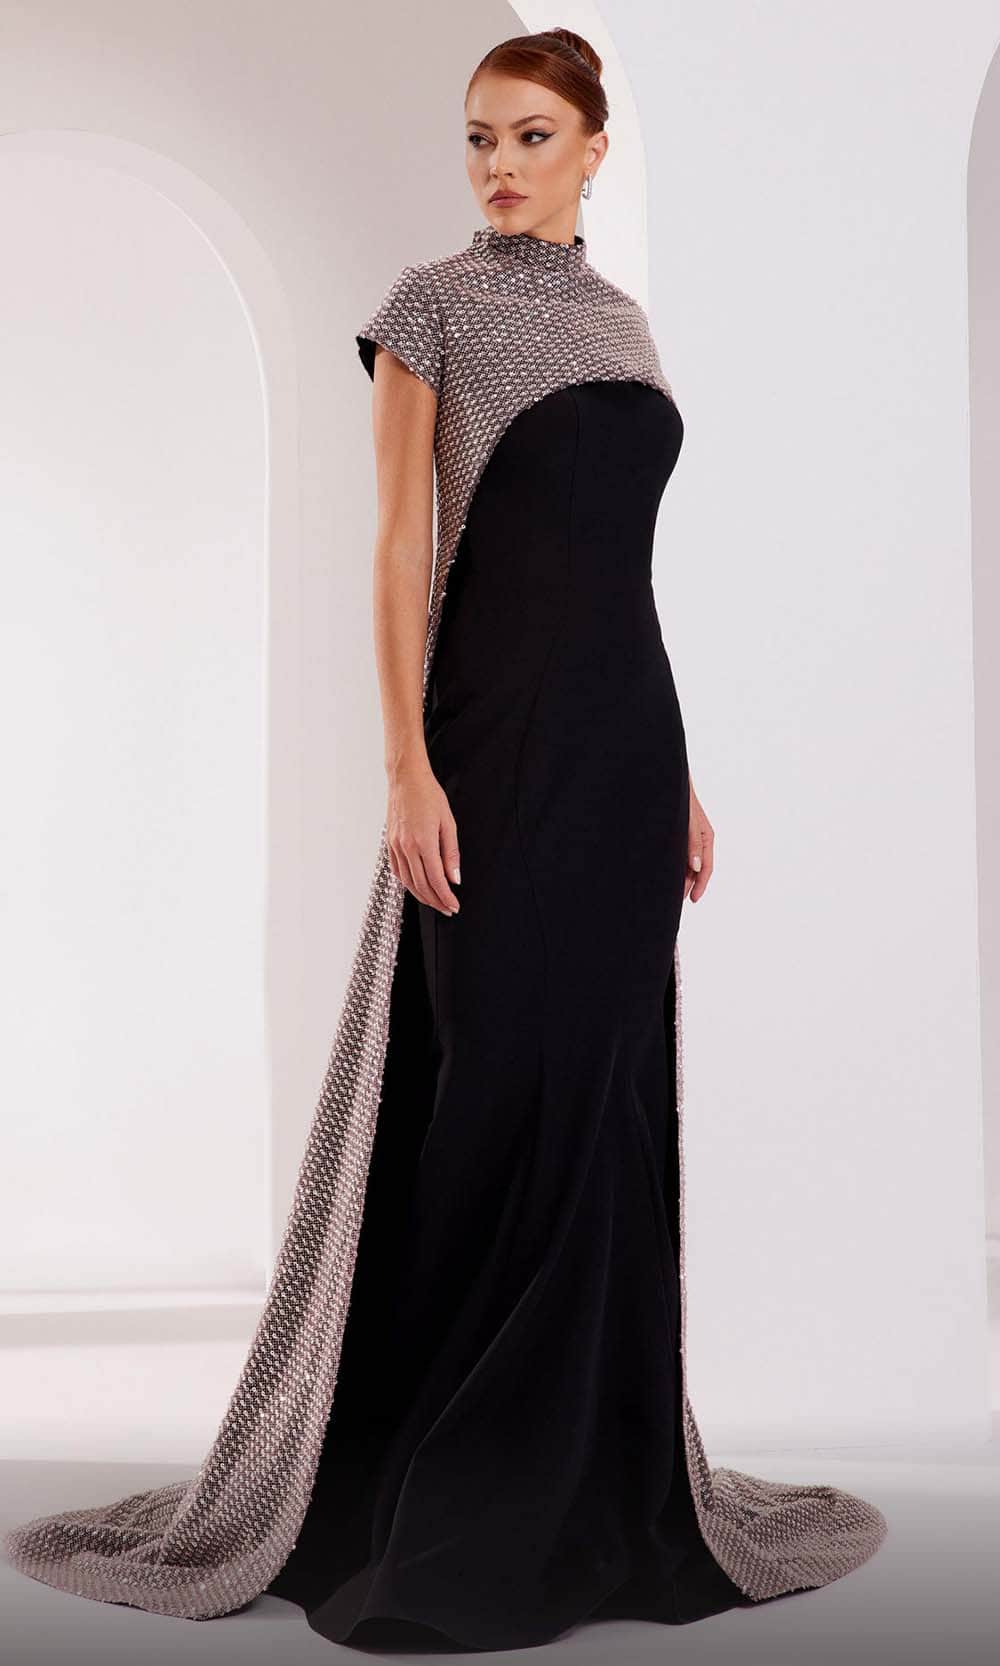 MNM Couture N0554 - Metallic Open Sheath Evening Dress Evening Dresses